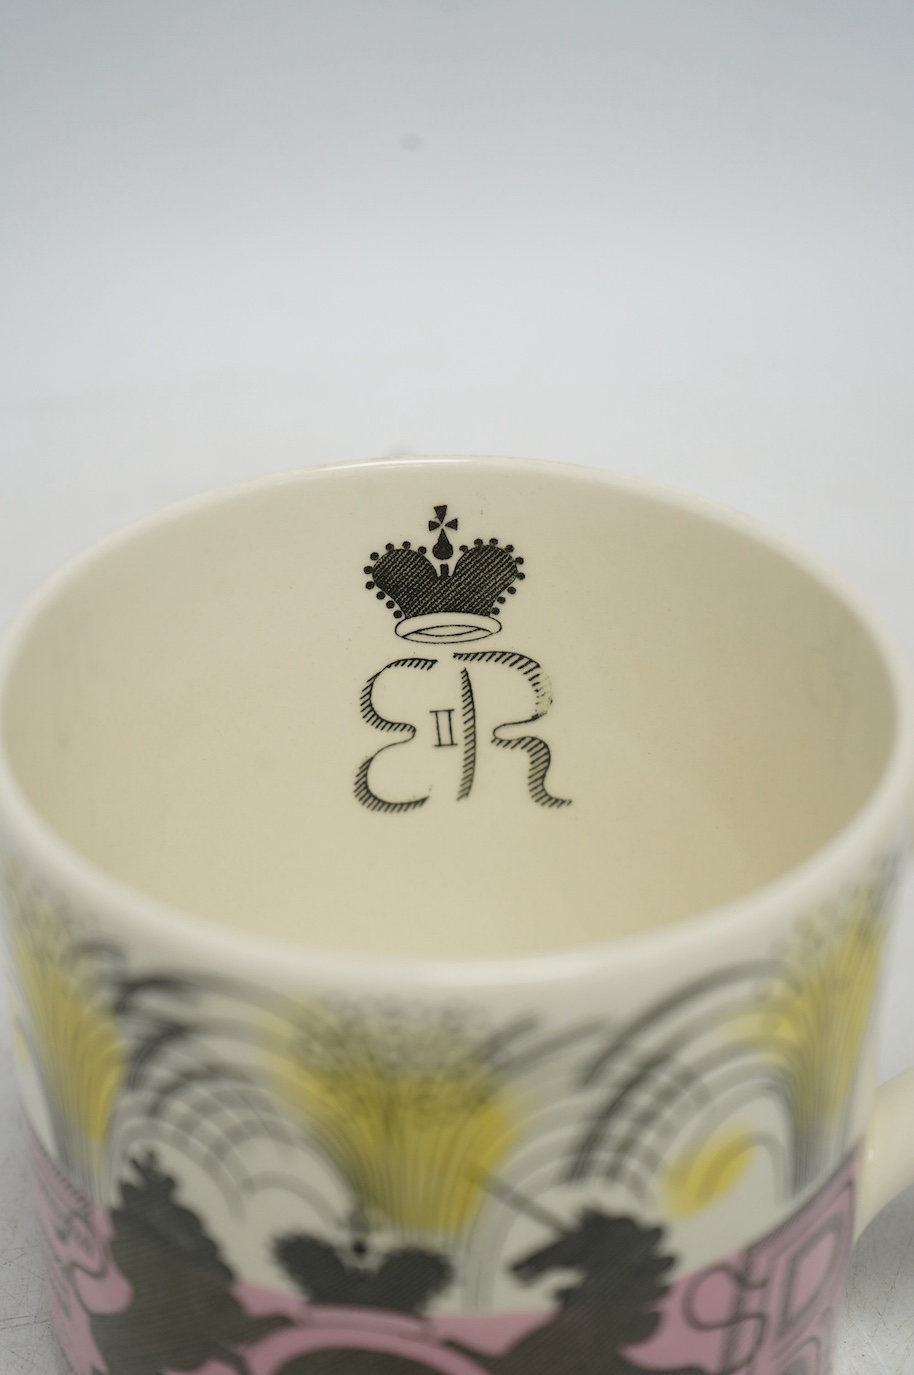 Eric Ravilious for Wedgwood, a 1953 Coronation mug, 10.5cm high, together with a Laura Knight coronation mug. Condition - fair to good